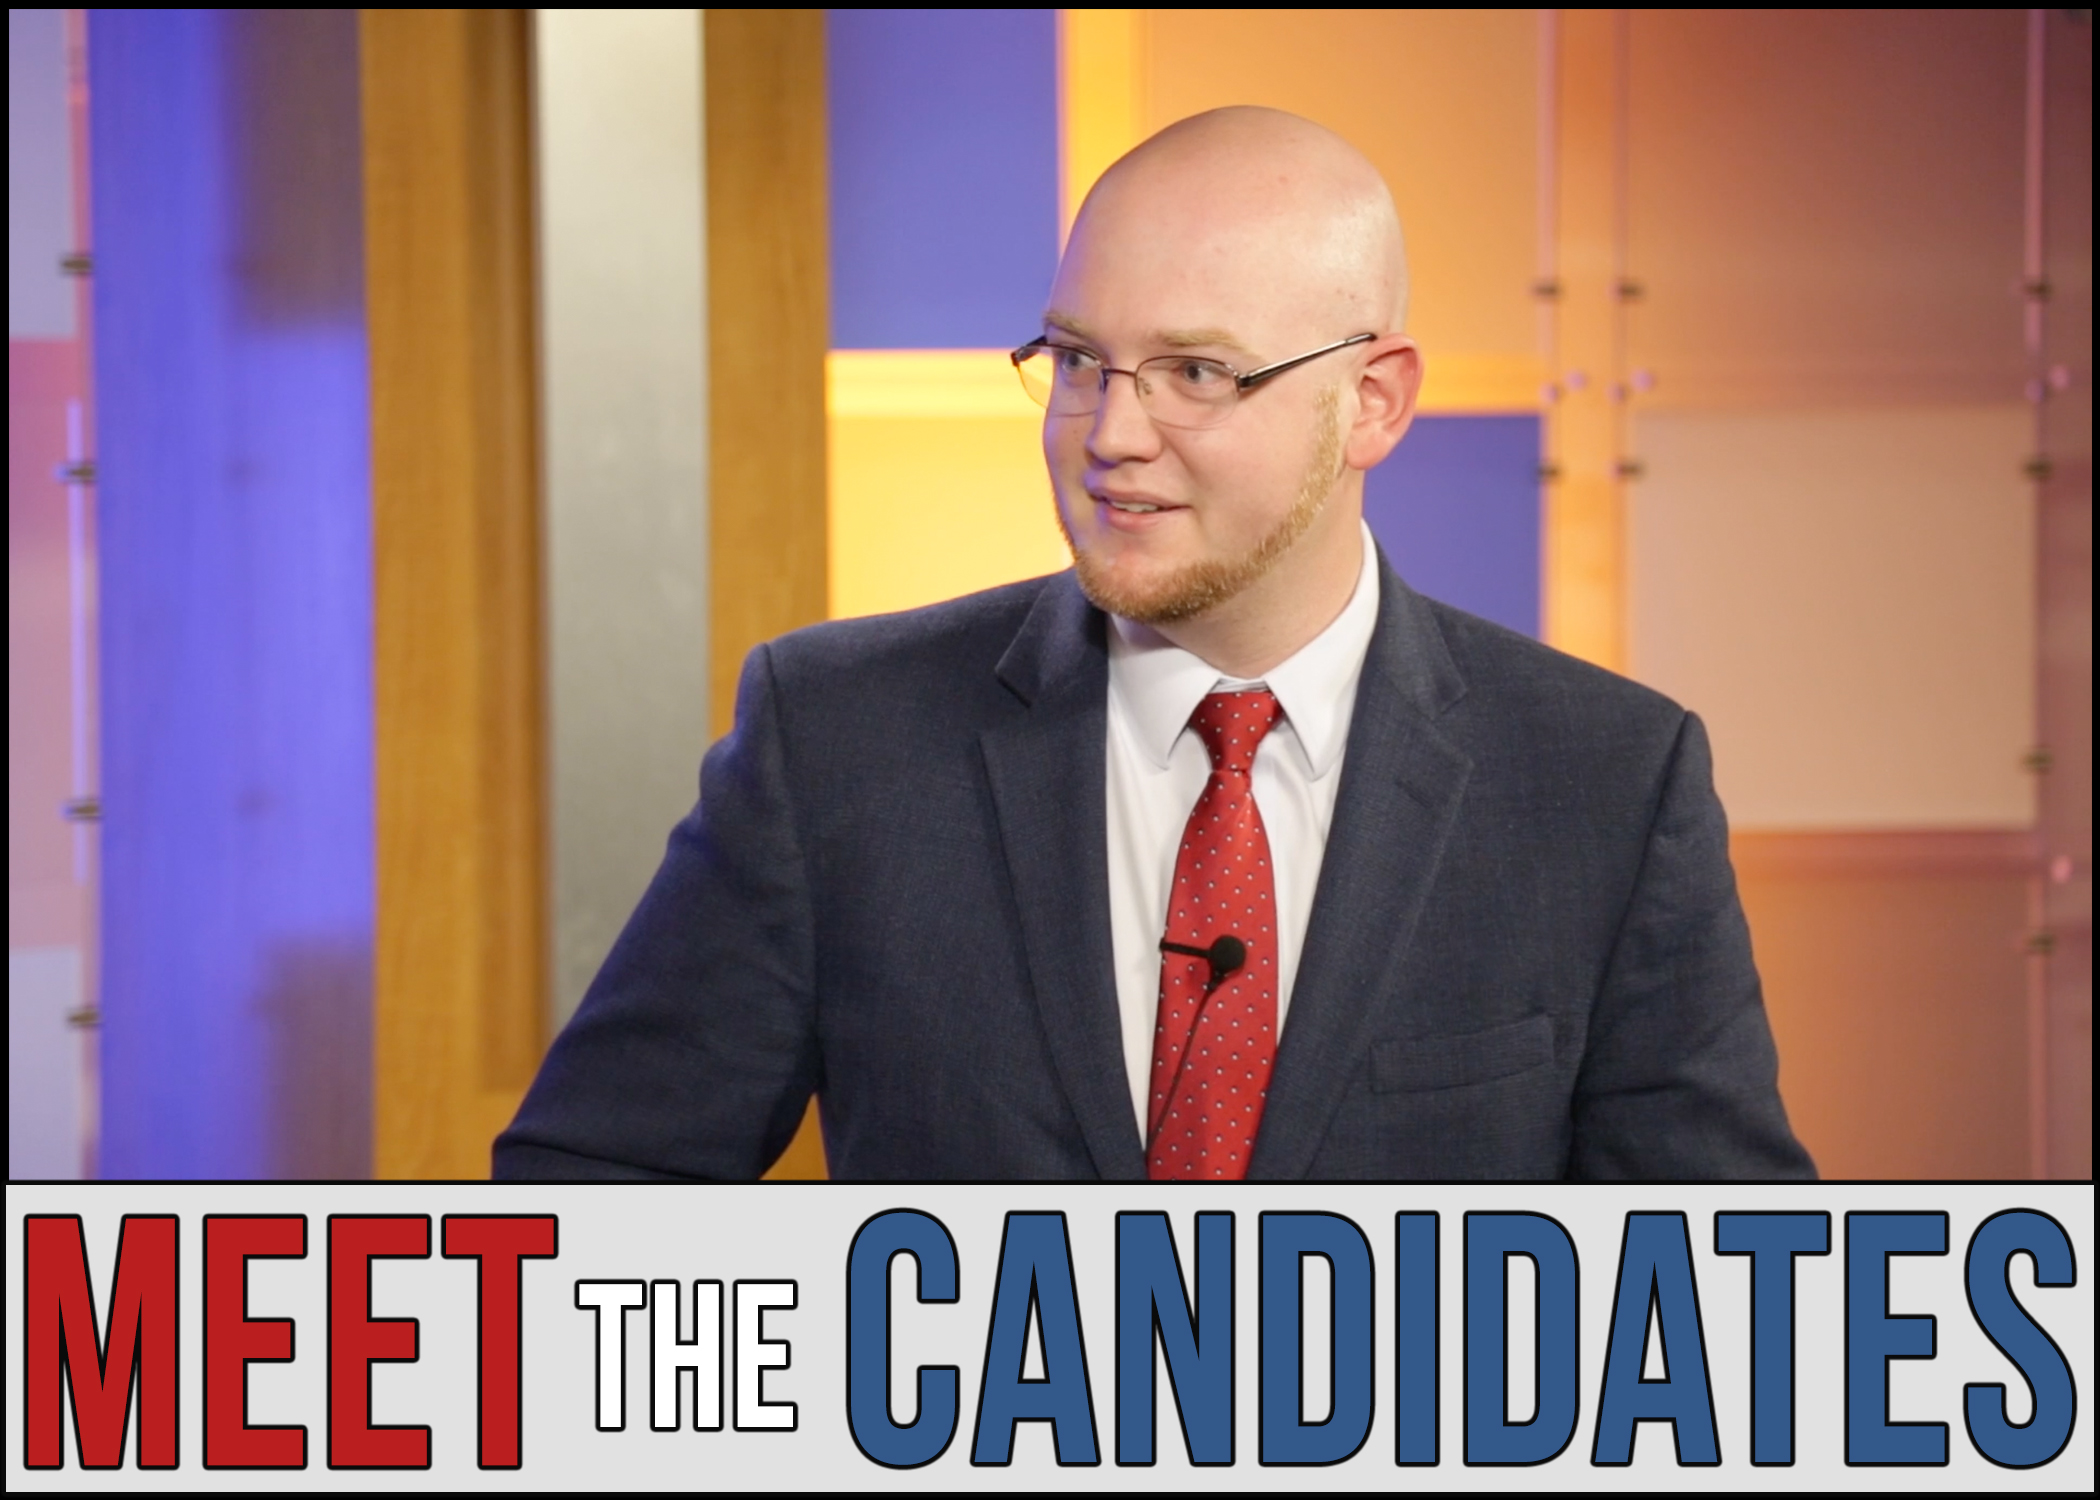 Meet the Candidates - Sean Costello